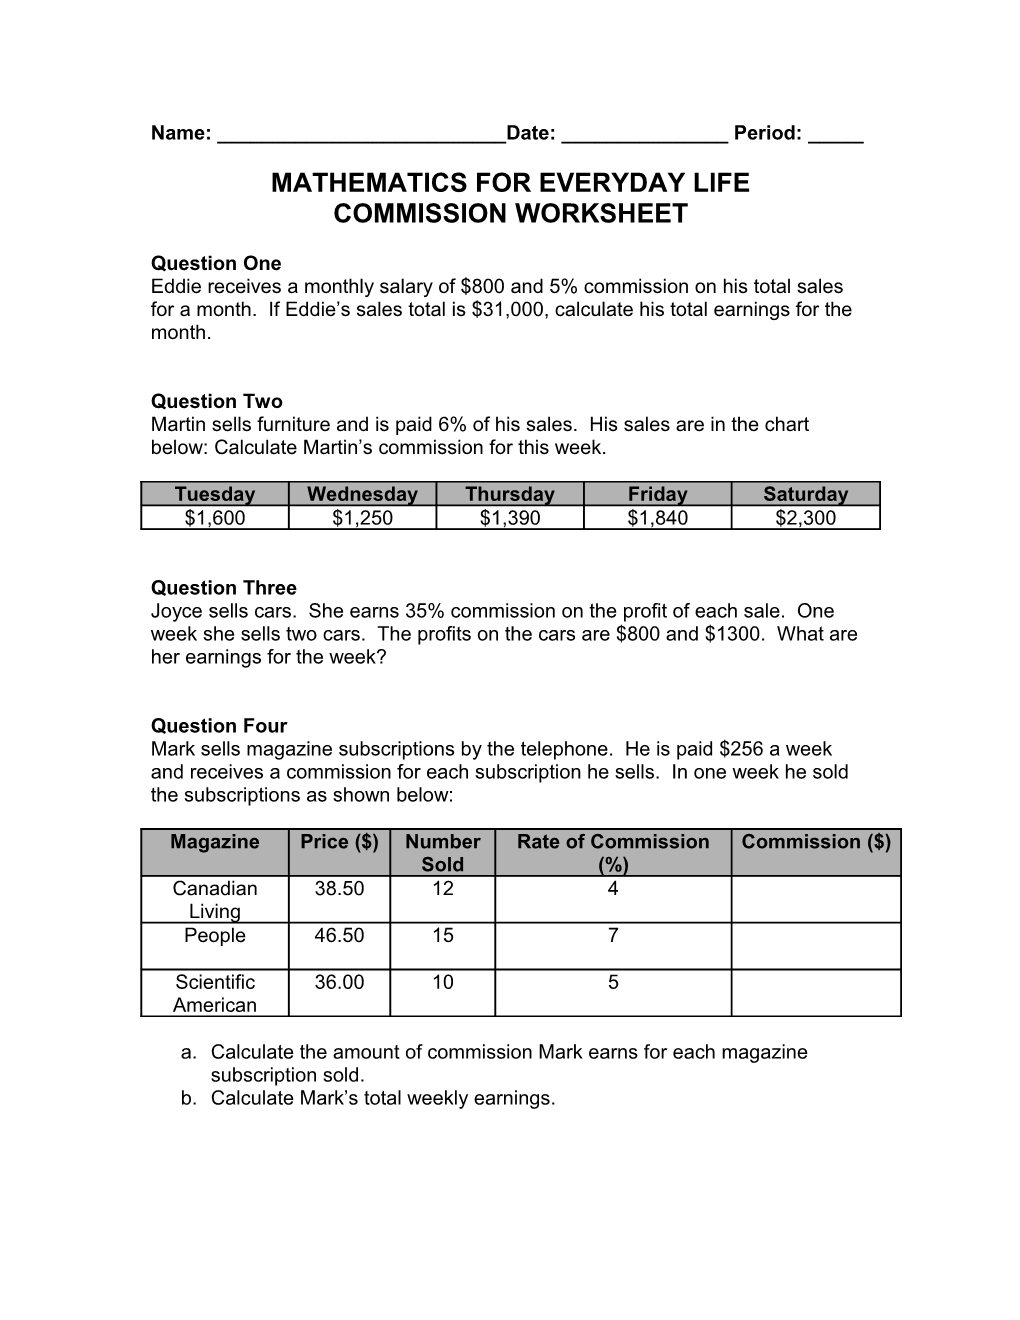 Mathematics for Everyday Life